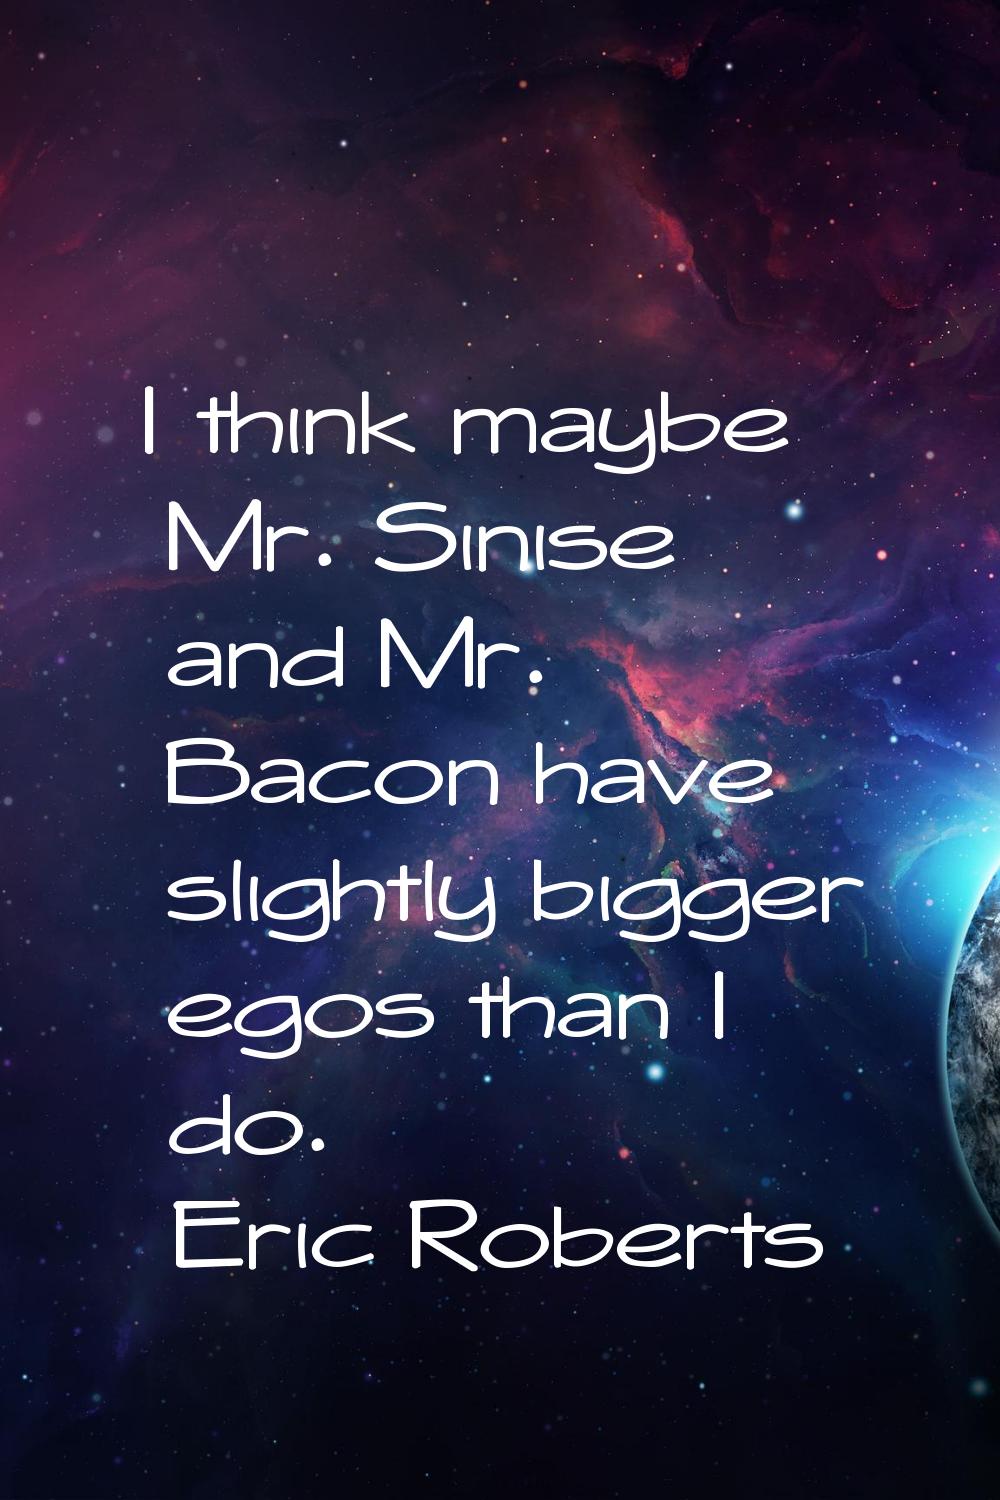 I think maybe Mr. Sinise and Mr. Bacon have slightly bigger egos than I do.